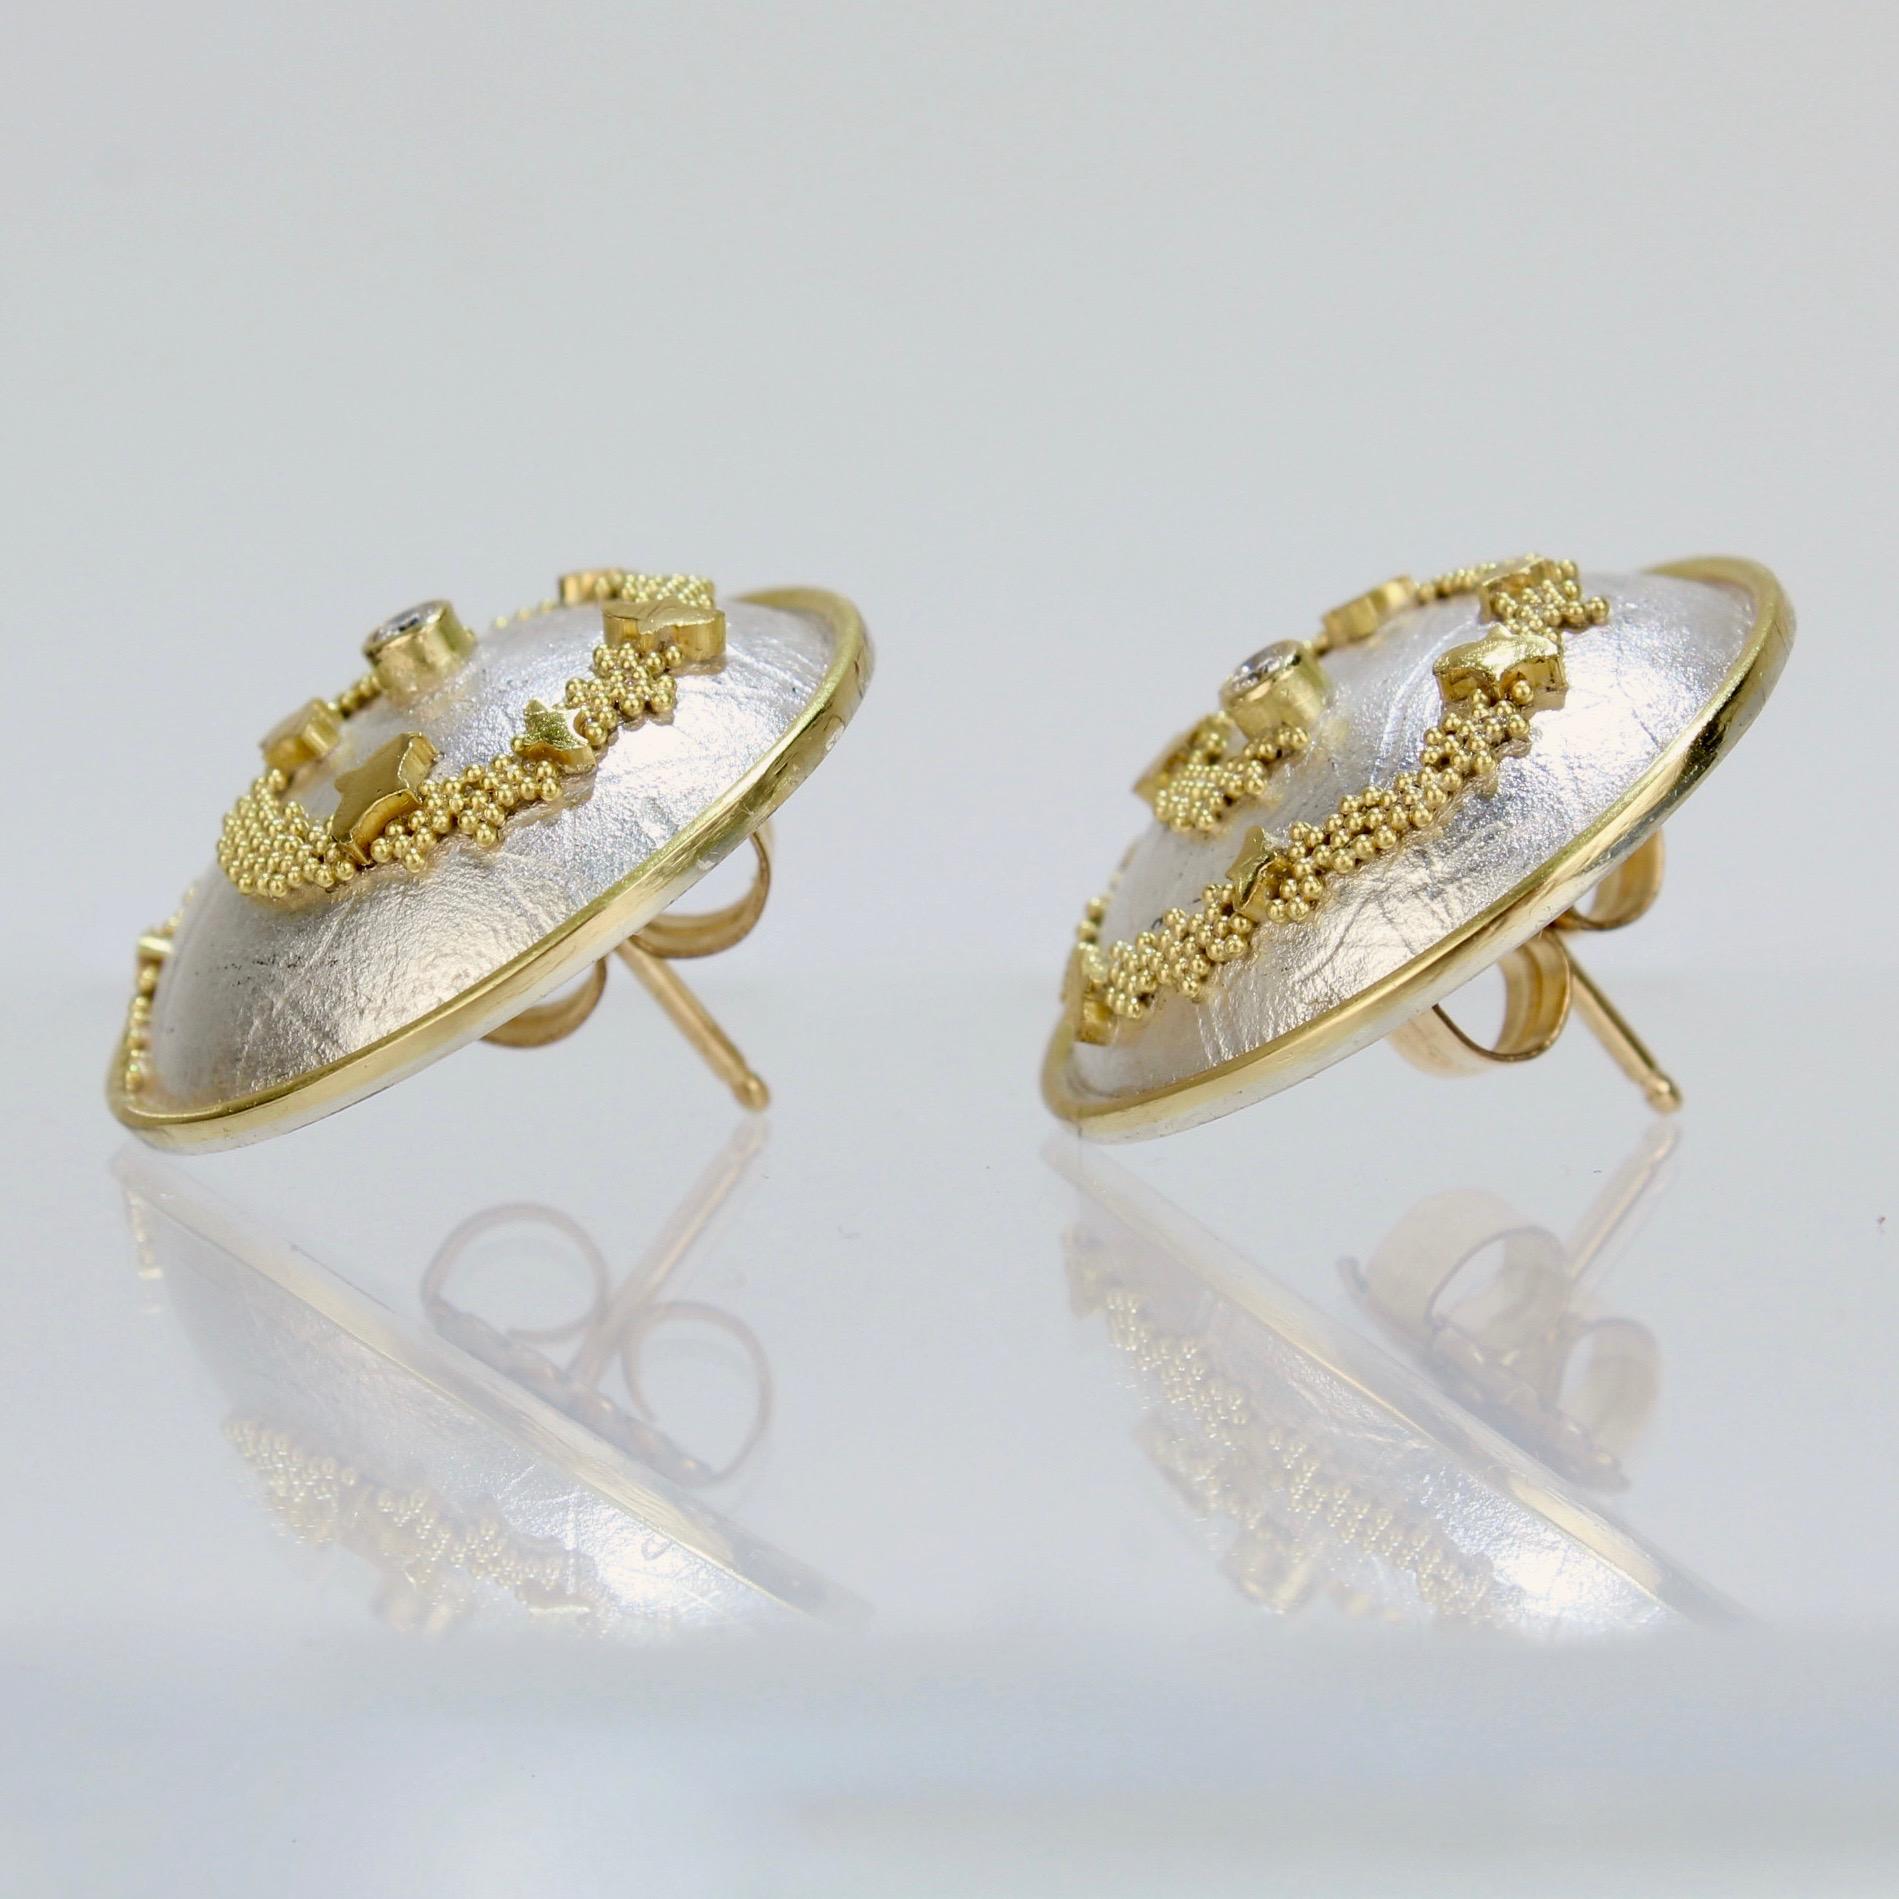 Round Cut Cornelia Goldsmith Granulated High Karat Gold, Silver and Diamond Round Earrings